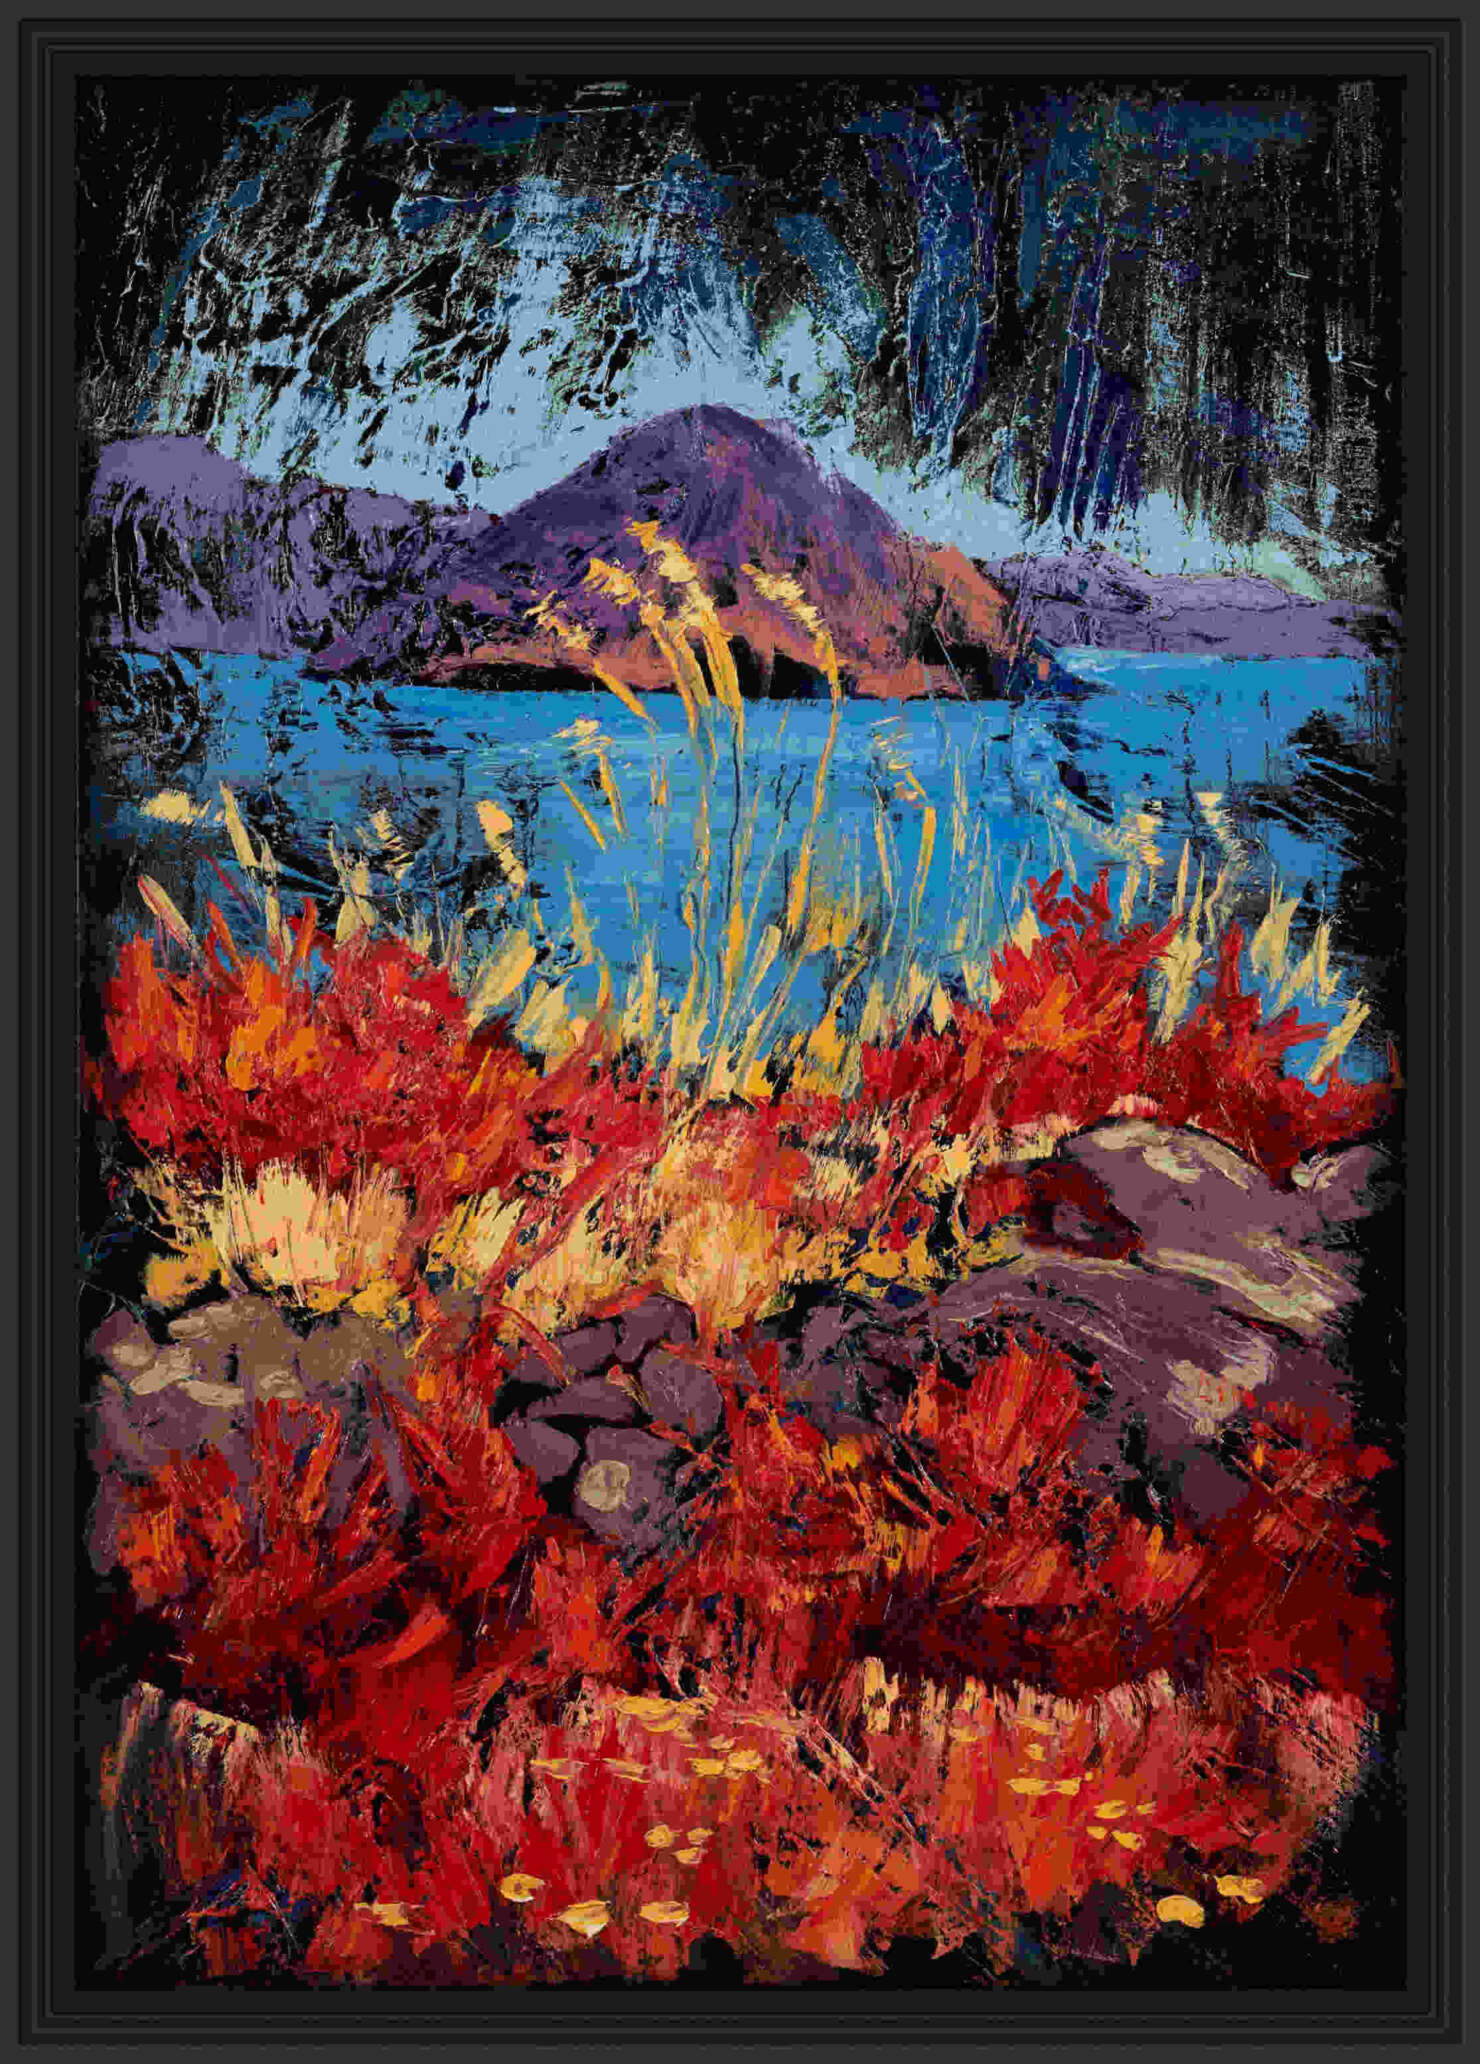 artist rod coyne's landscape "Hog's Head Breeze" is shown here, in a black frame.